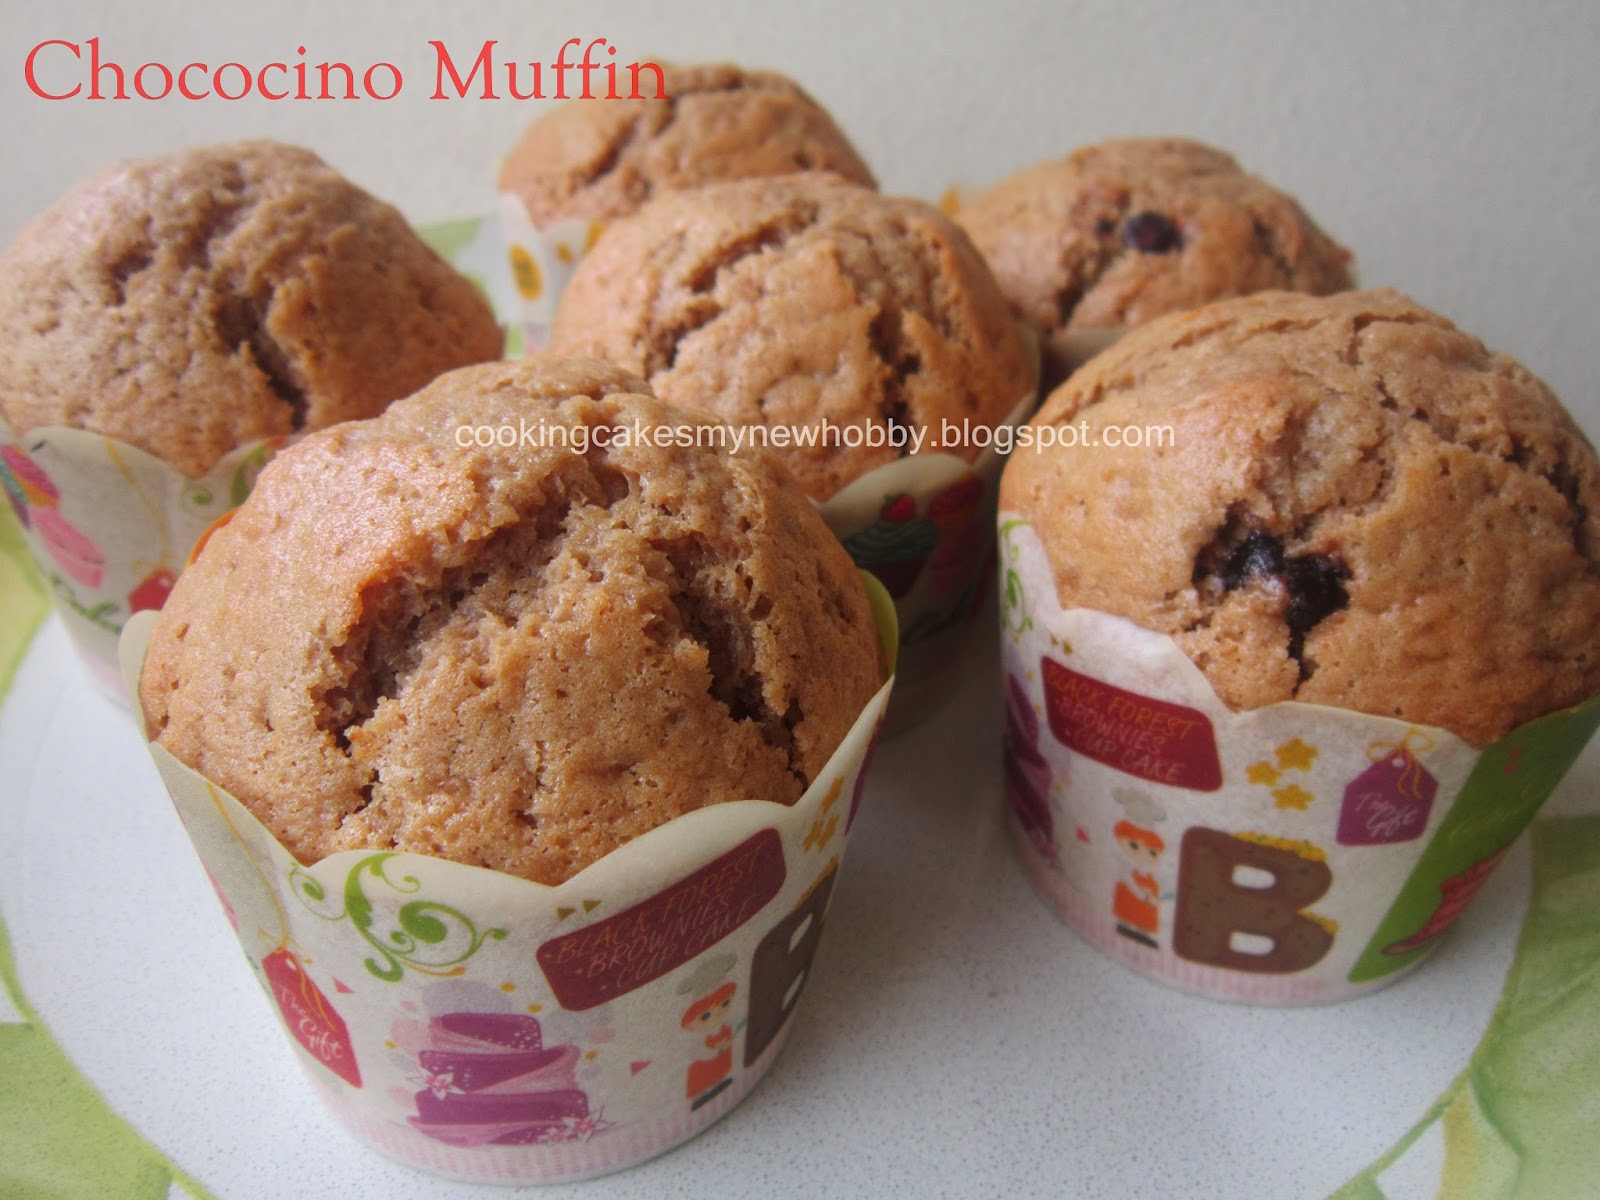 Cappuccino Muffins and Chococino Muffin